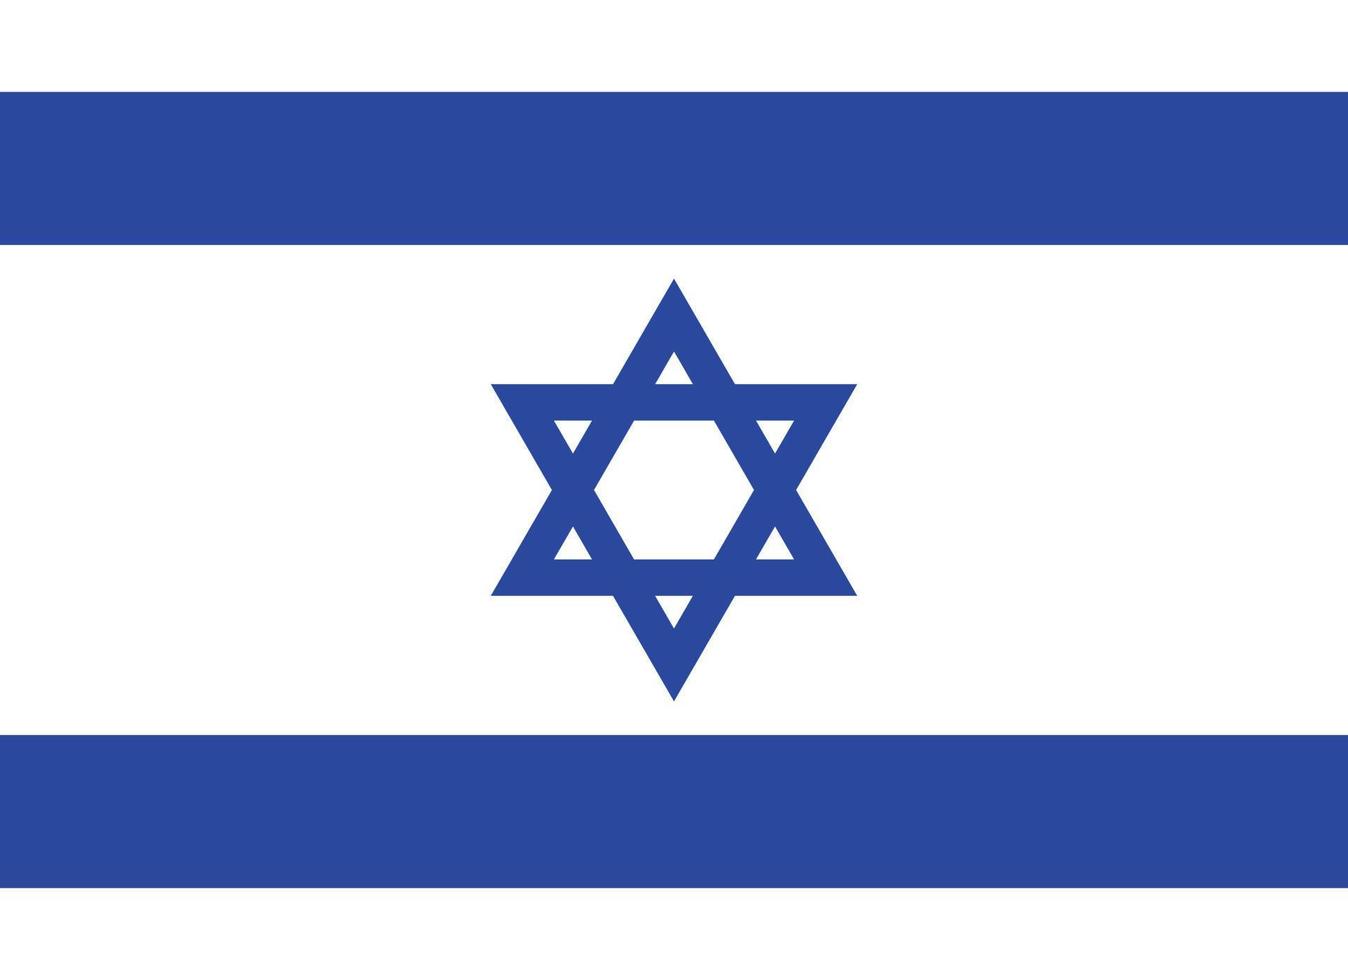 Vektorillustration der israelischen Flagge vektor